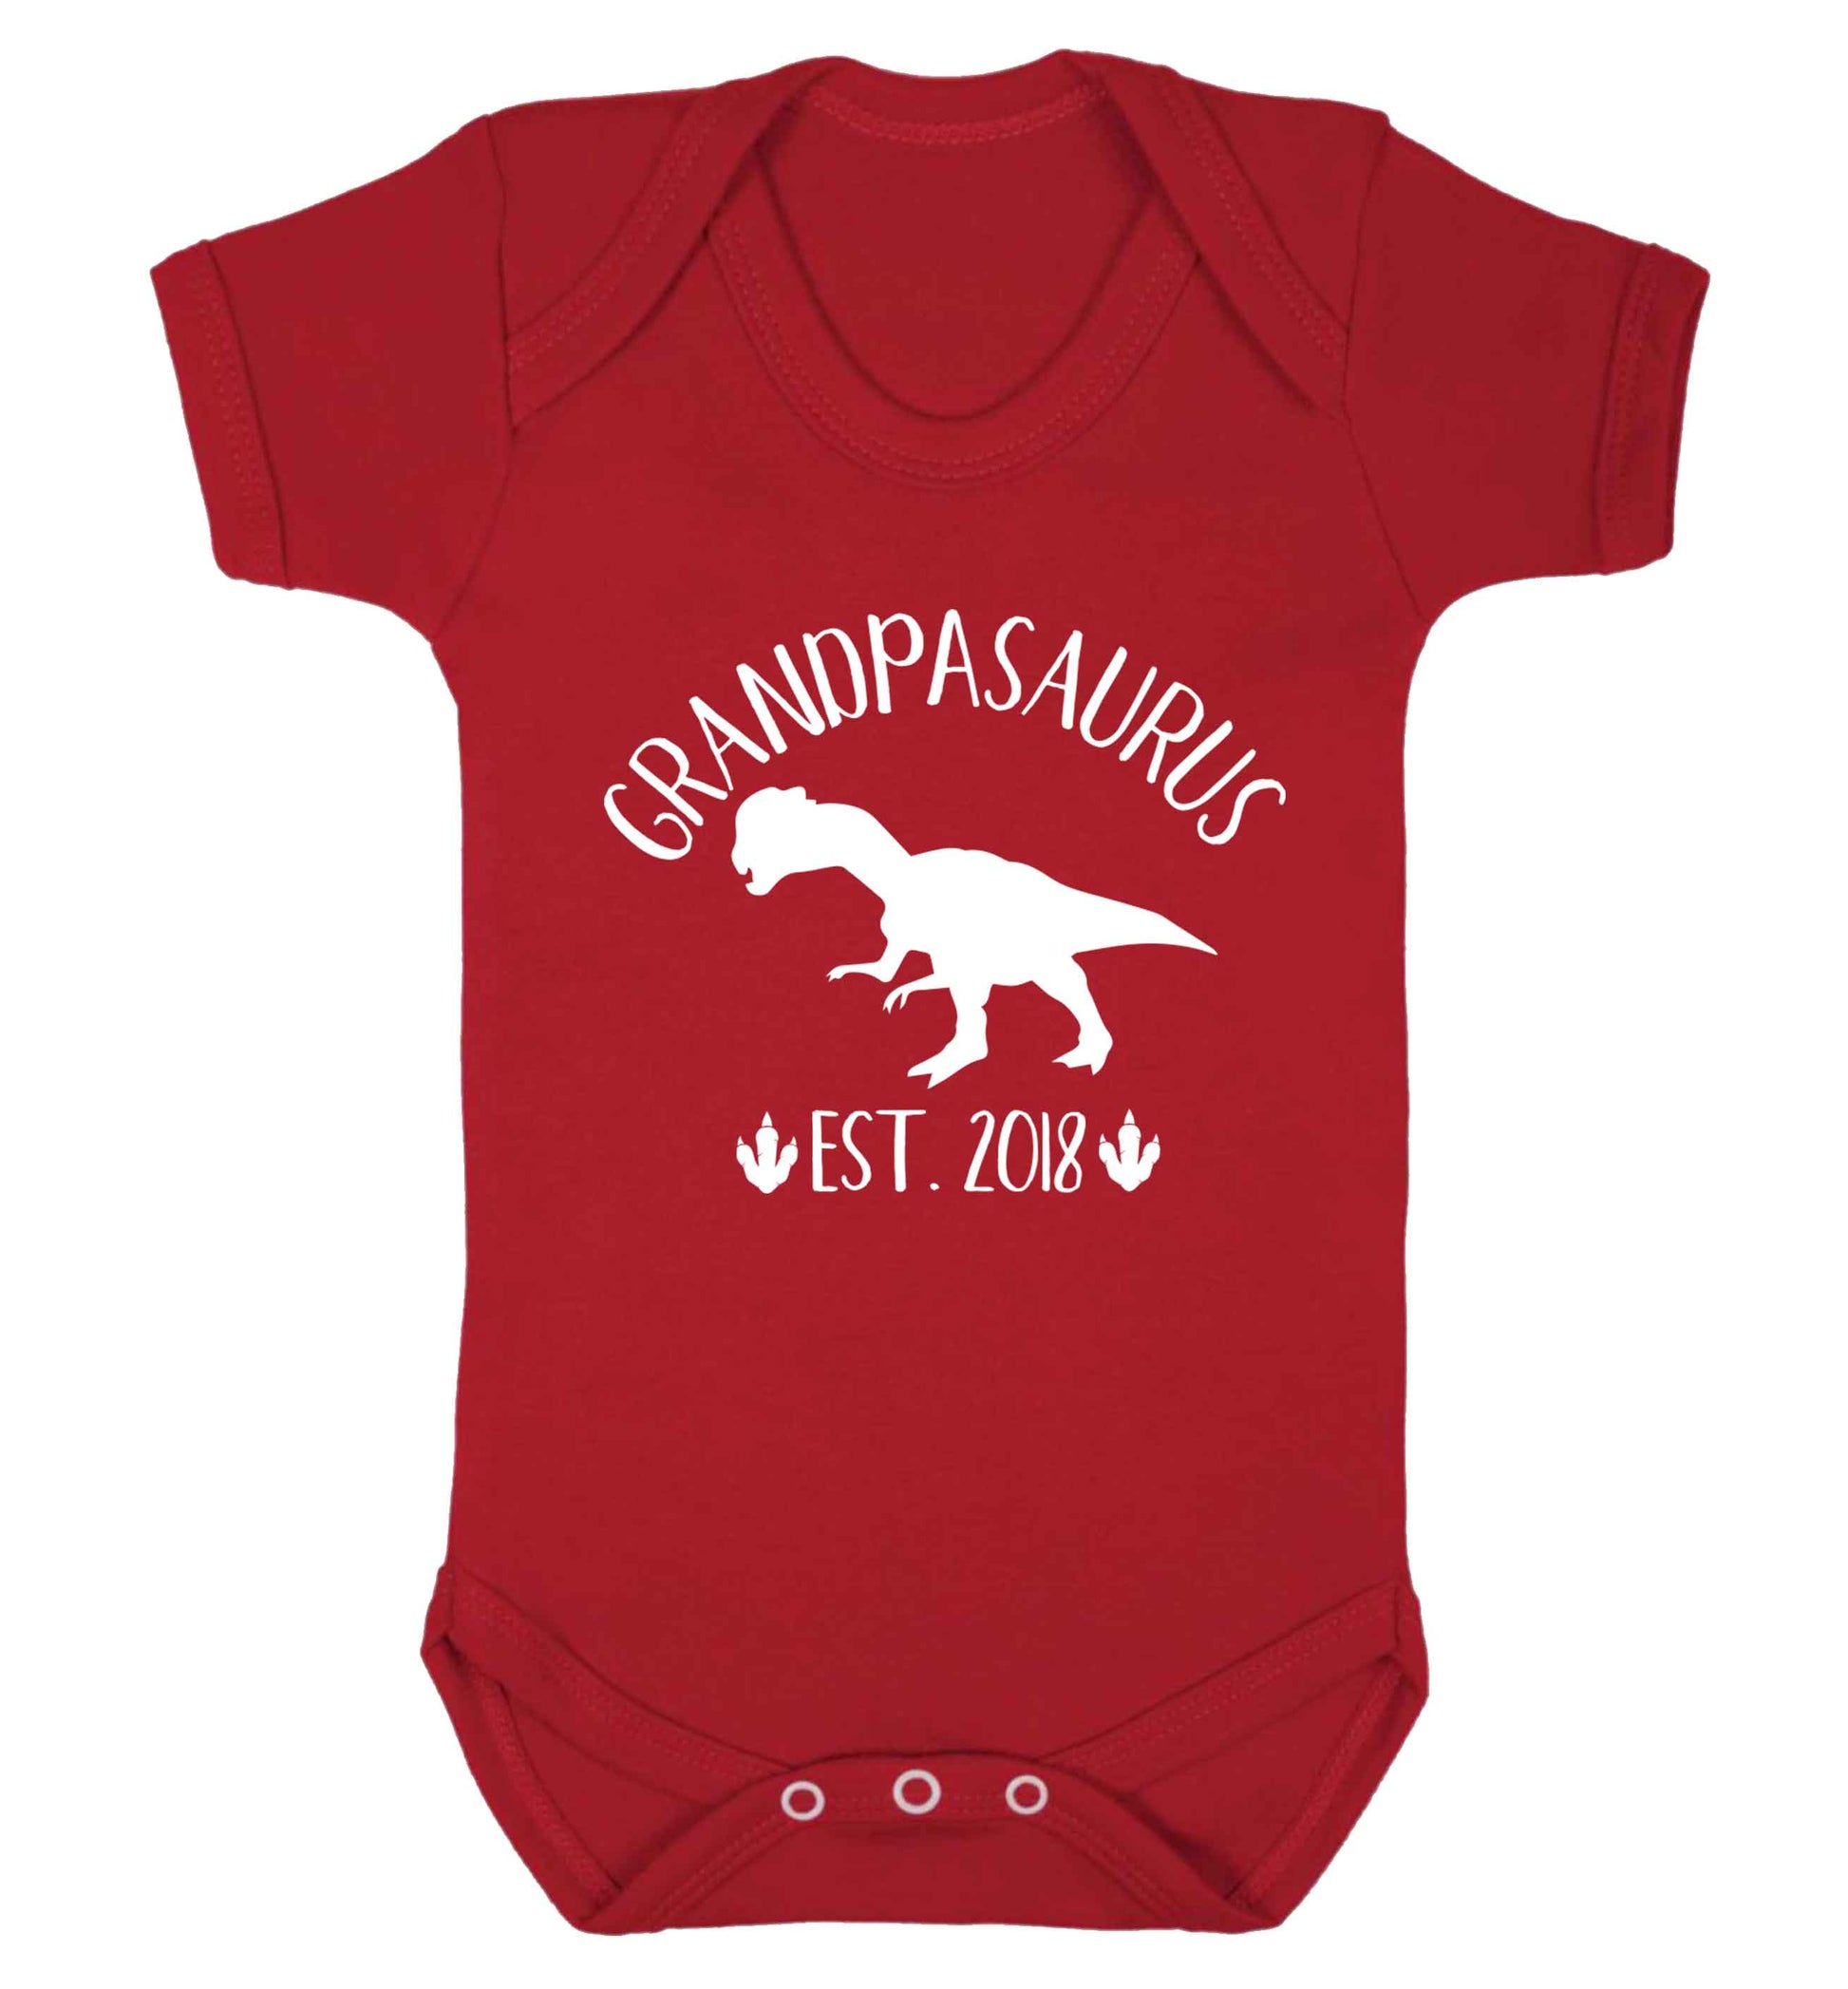 Personalised grandpasaurus since (custom date) Baby Vest red 18-24 months